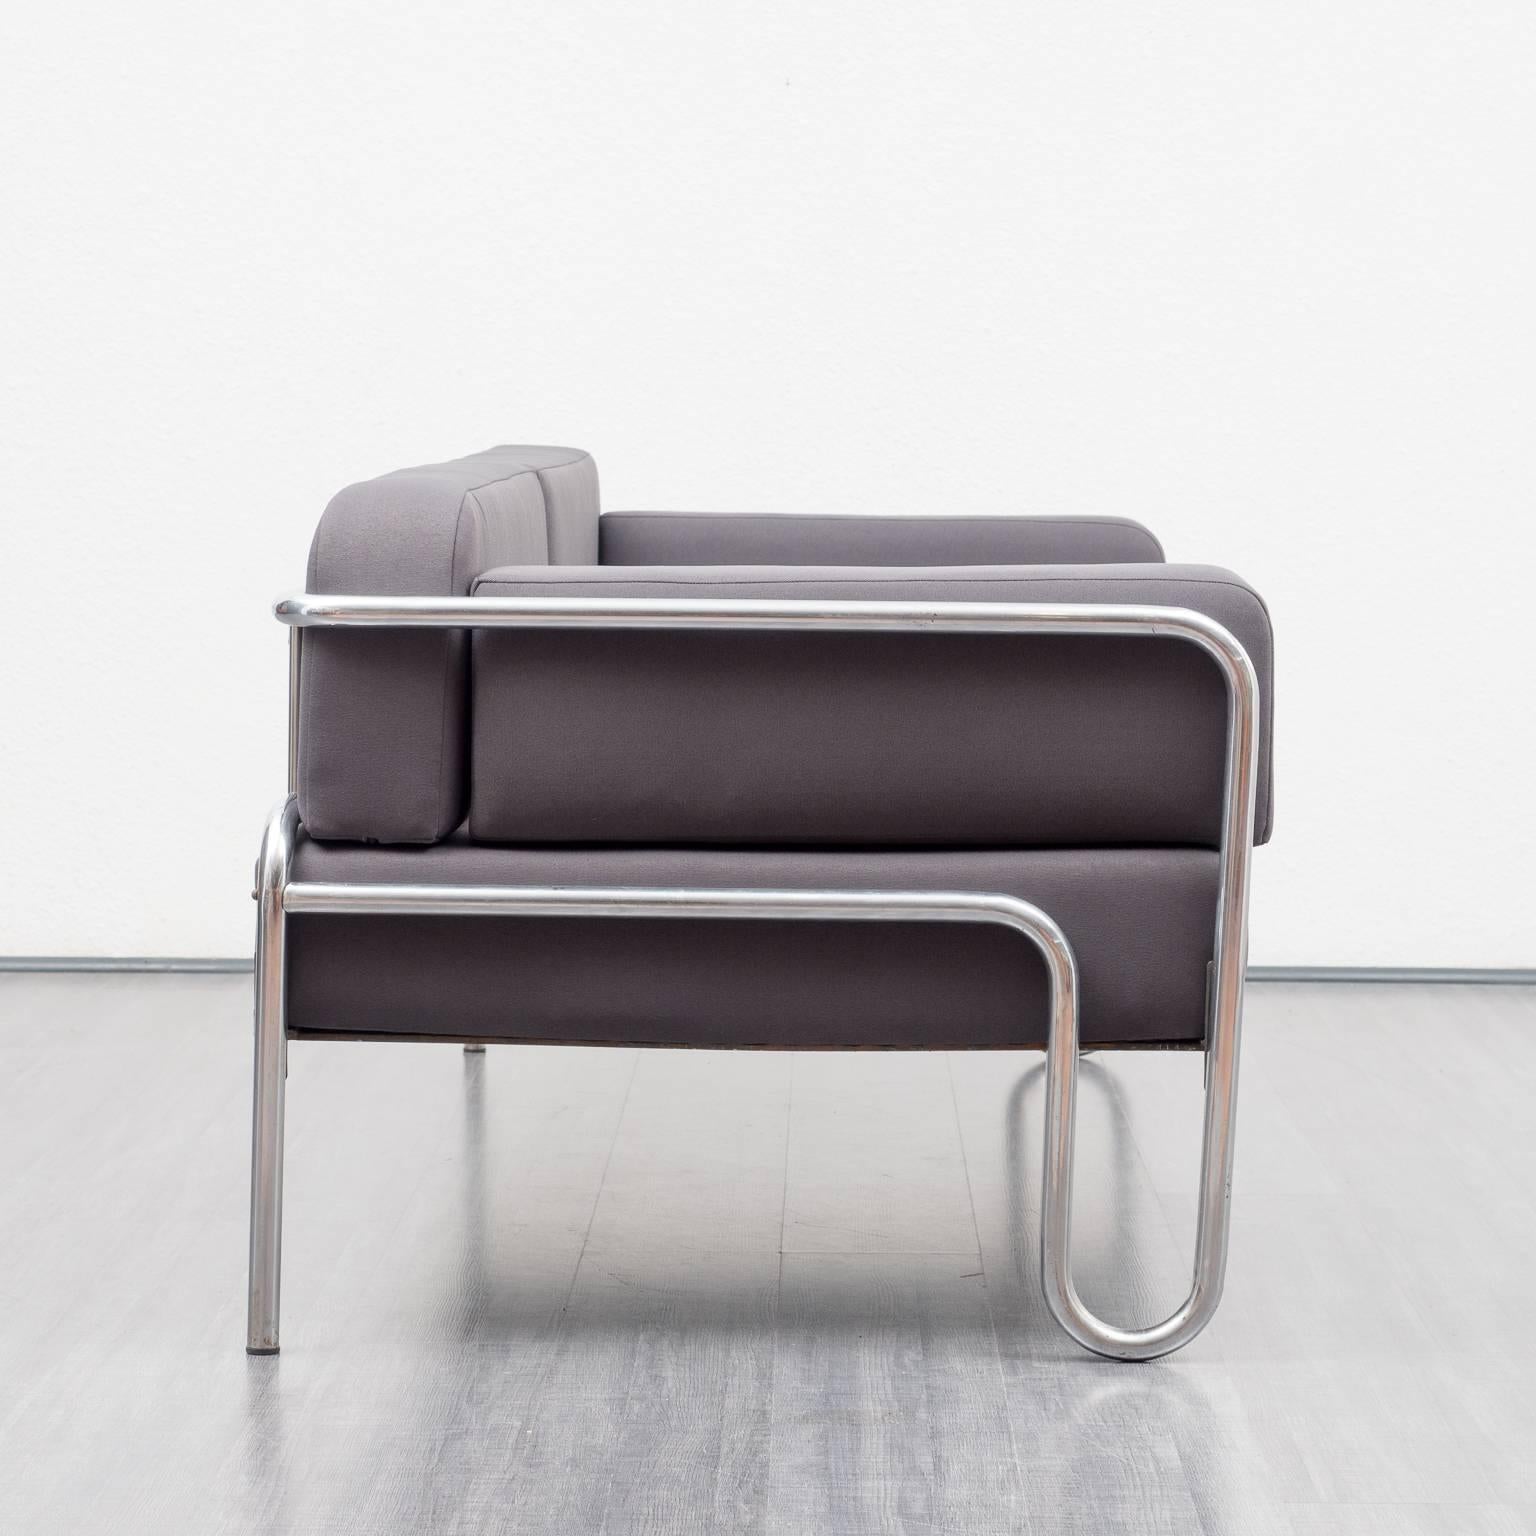 1930s Bauhaus Sofa, New Upholstery, Anthracite Fabric, Tubulair Steel Frame 1